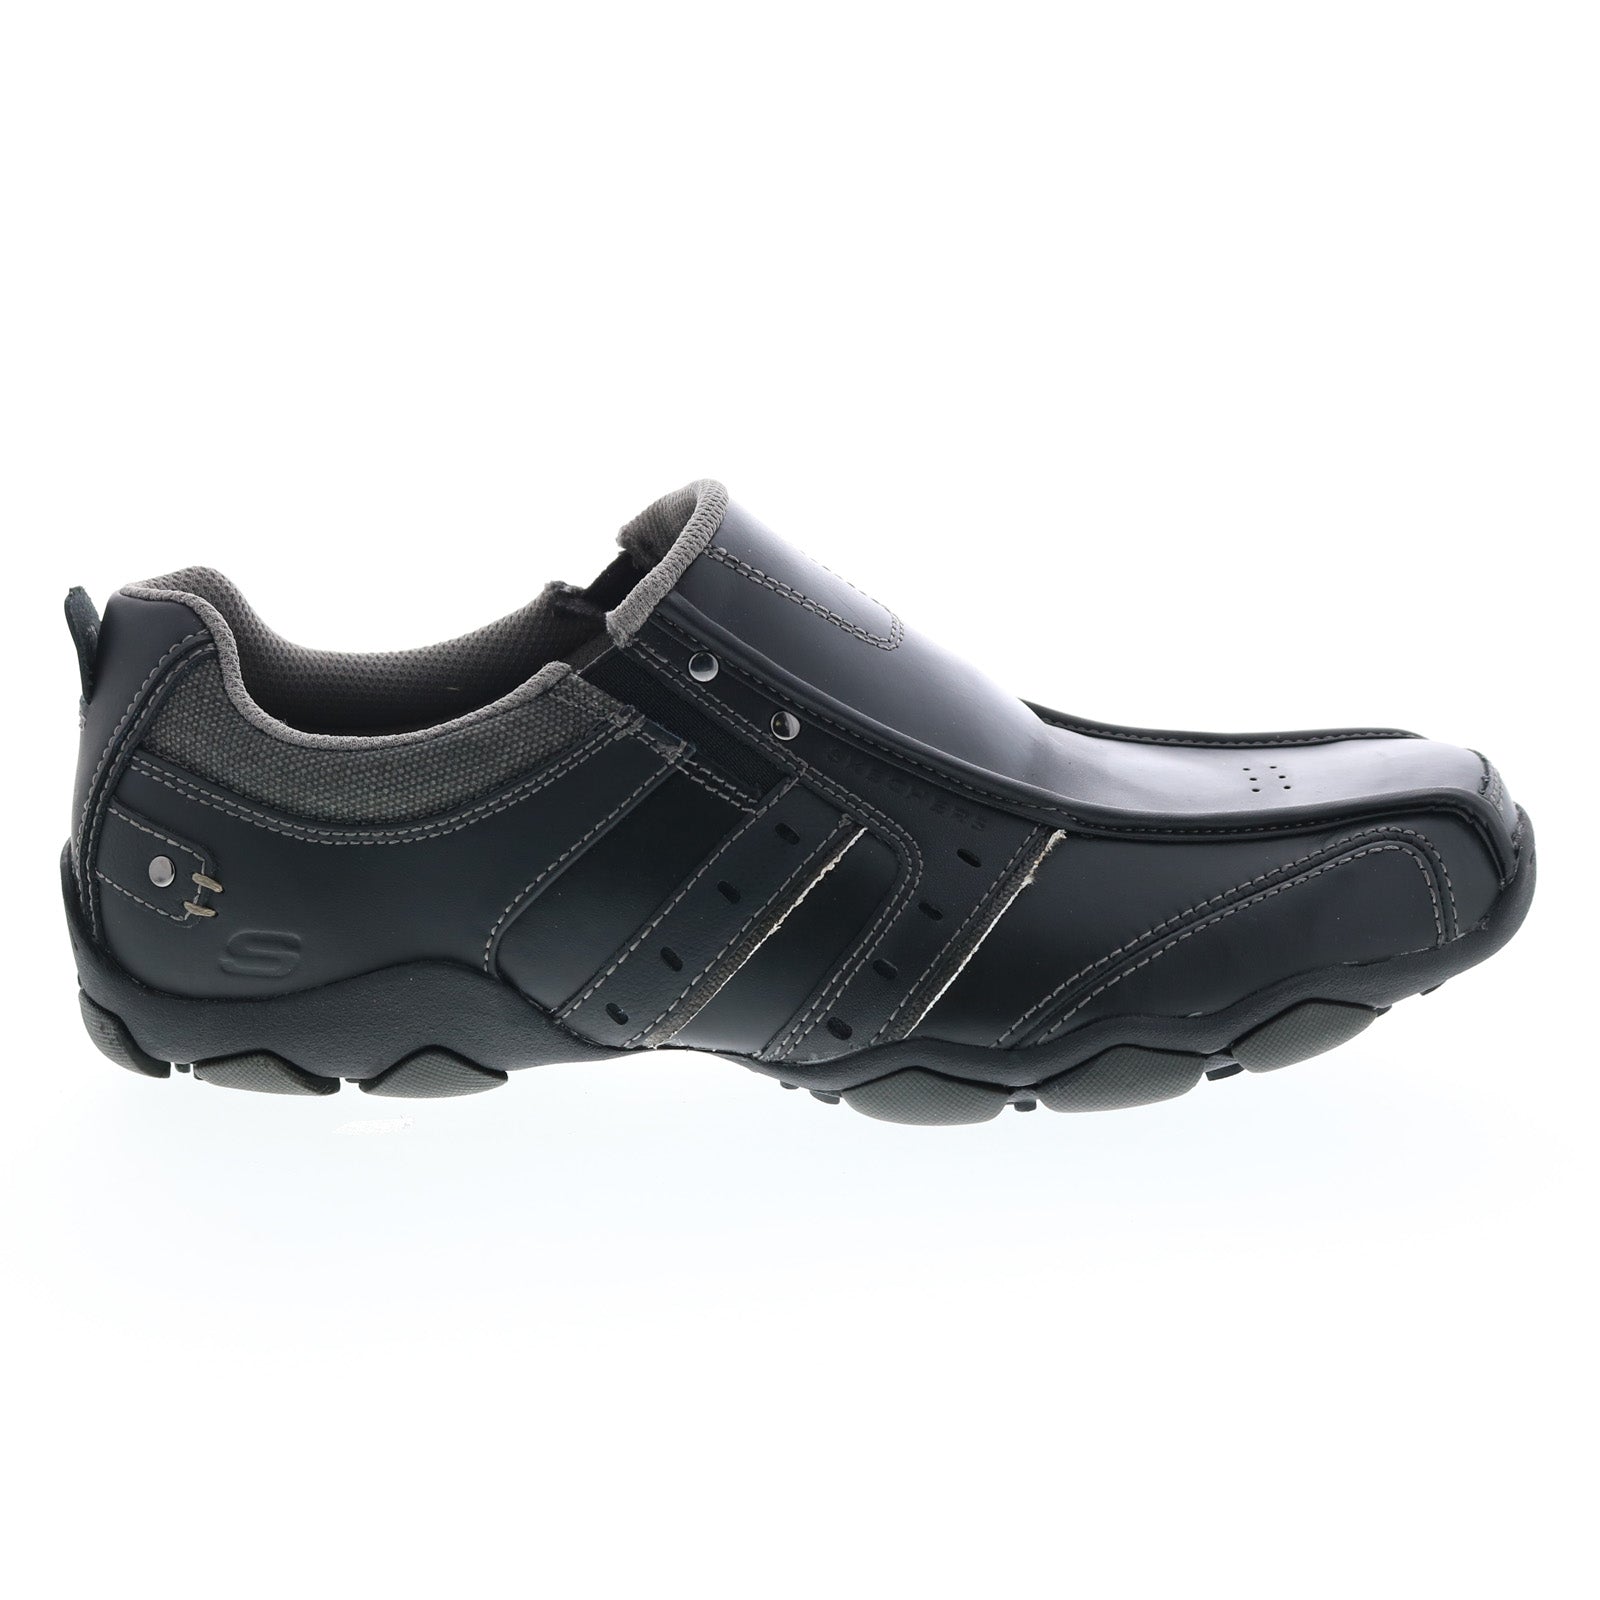 Dwell flare vil beslutte Skechers Diameter 61779 Mens Black Leather Loafers & Slip On Casual Shoes  10.5 - Ruze Shoes